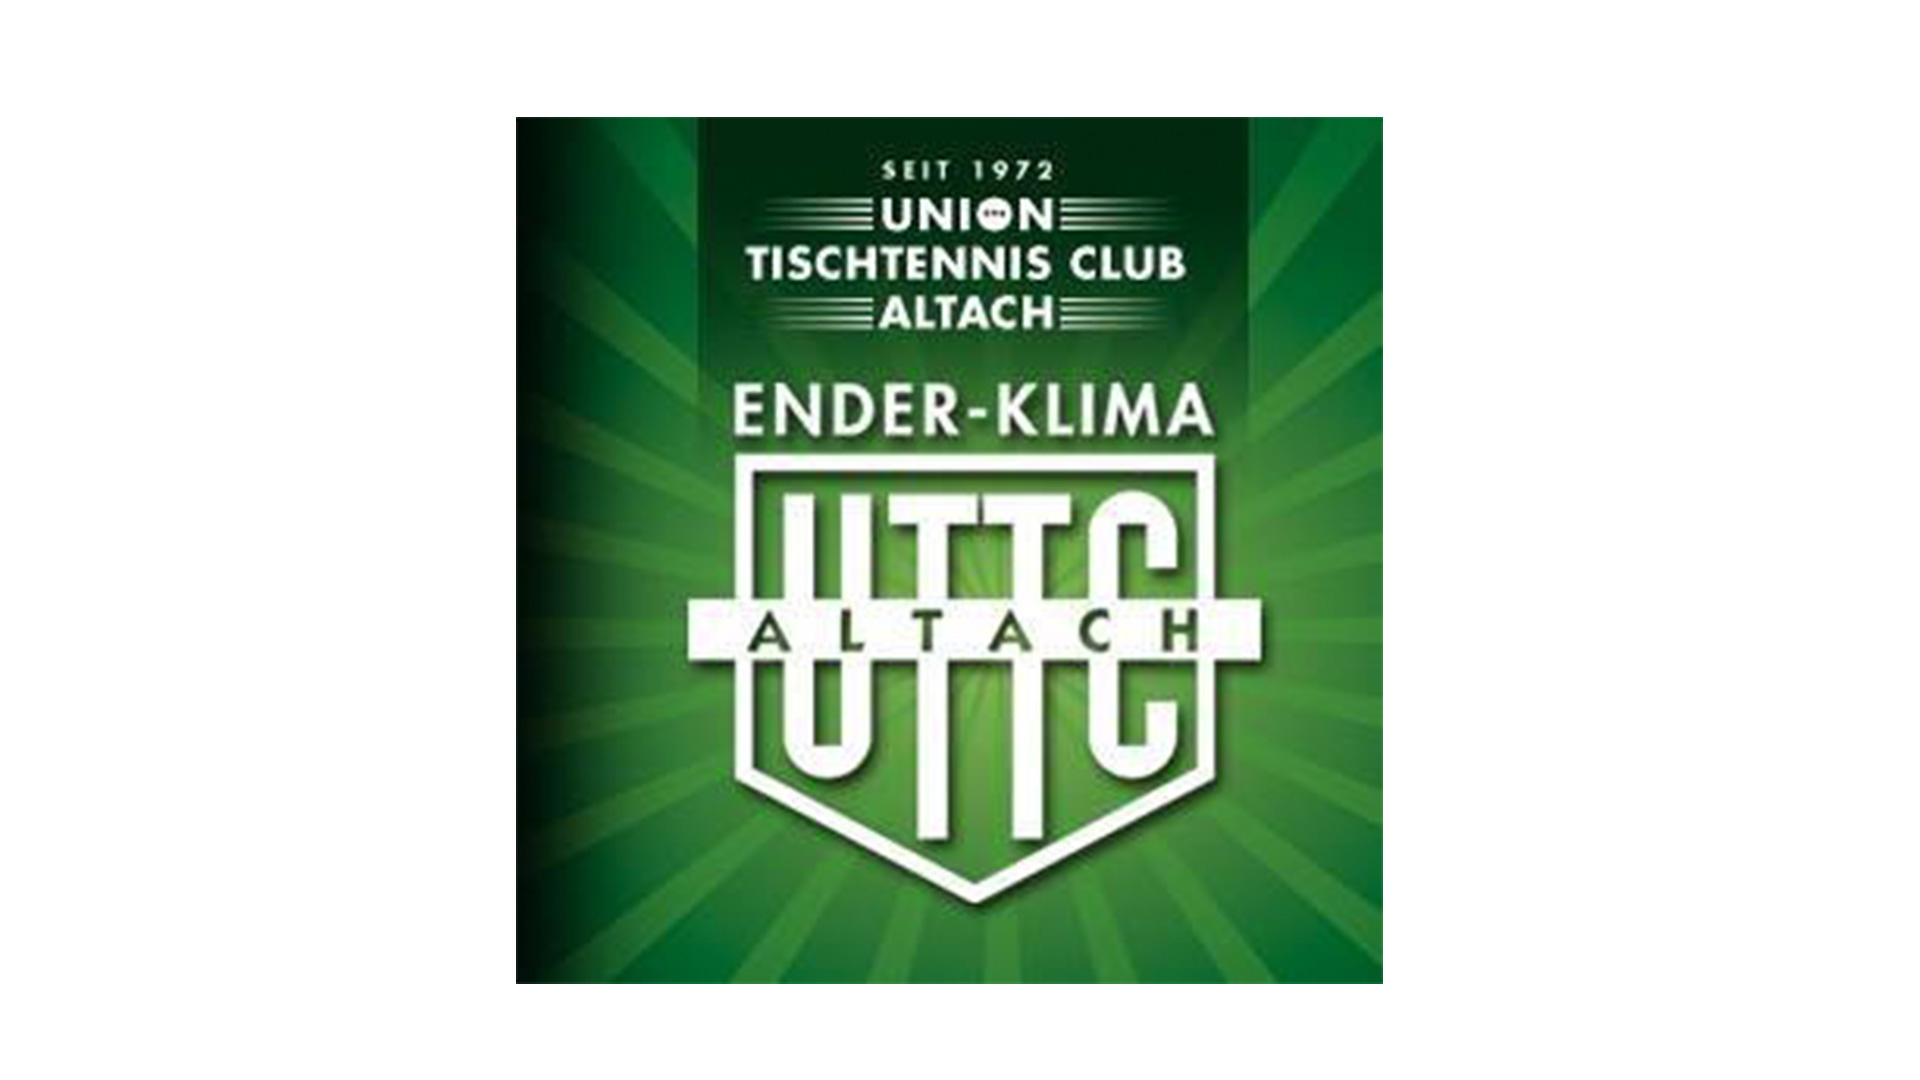 UTTC Altach Logo